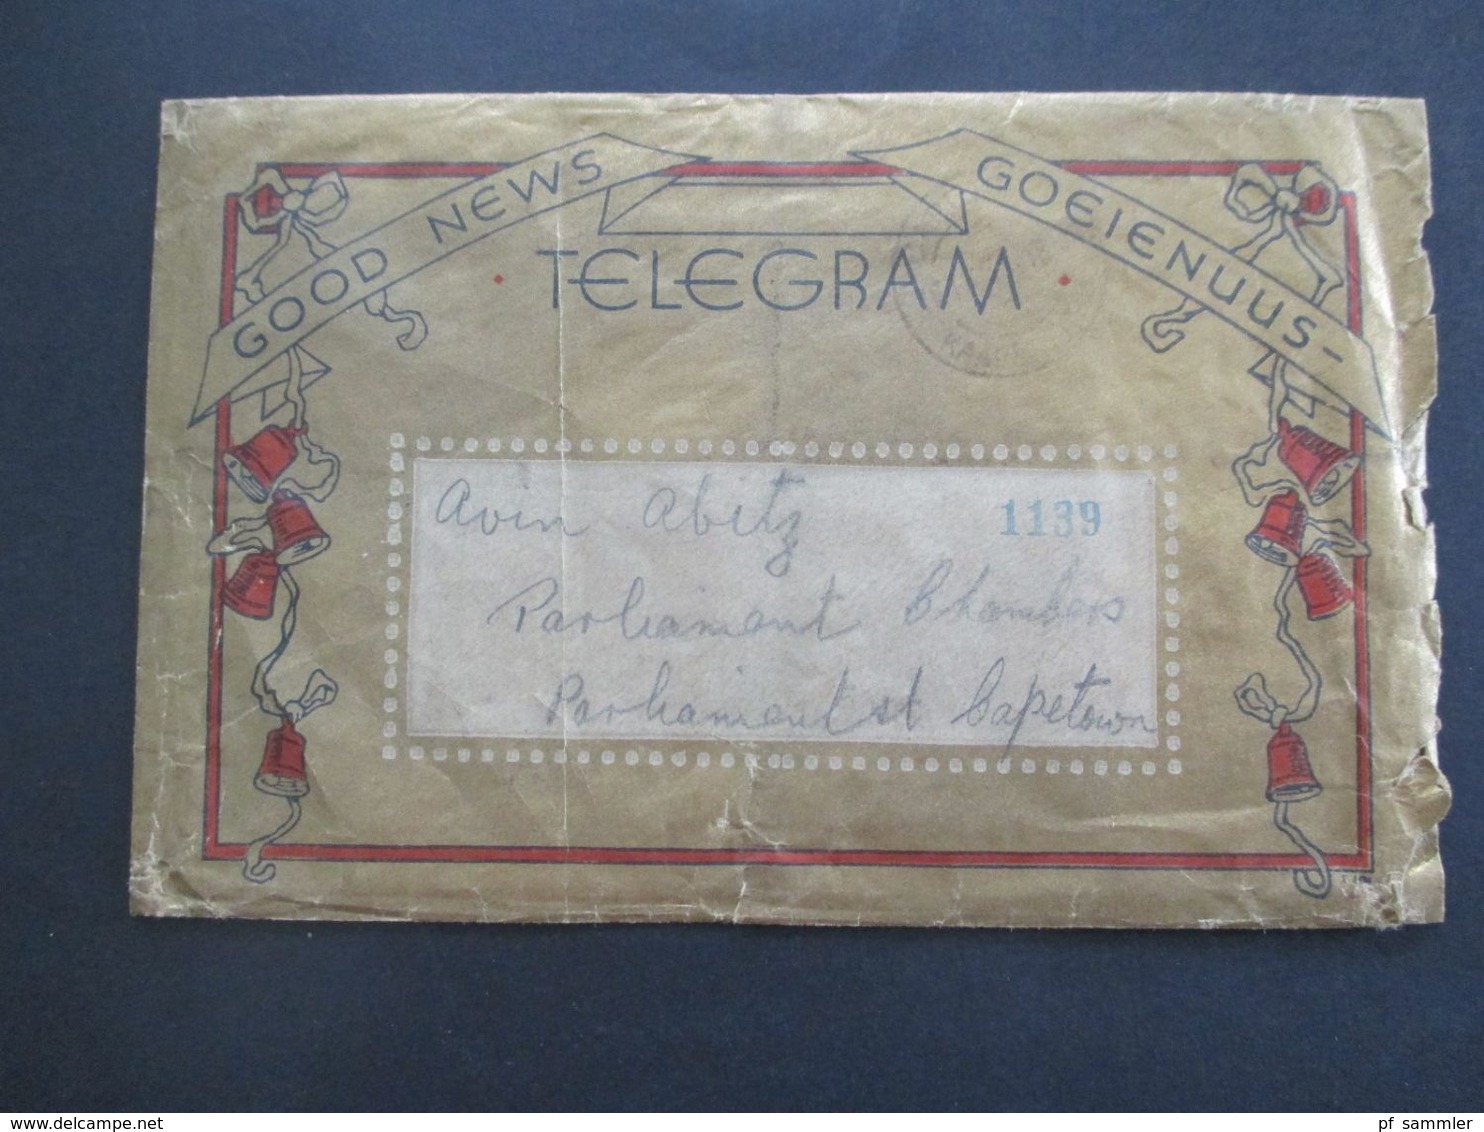 Südafrika Um 1930 ?! Telegram Goldener Umschlag Good News / Goeienuus An Das Parliament Capetown - Briefe U. Dokumente